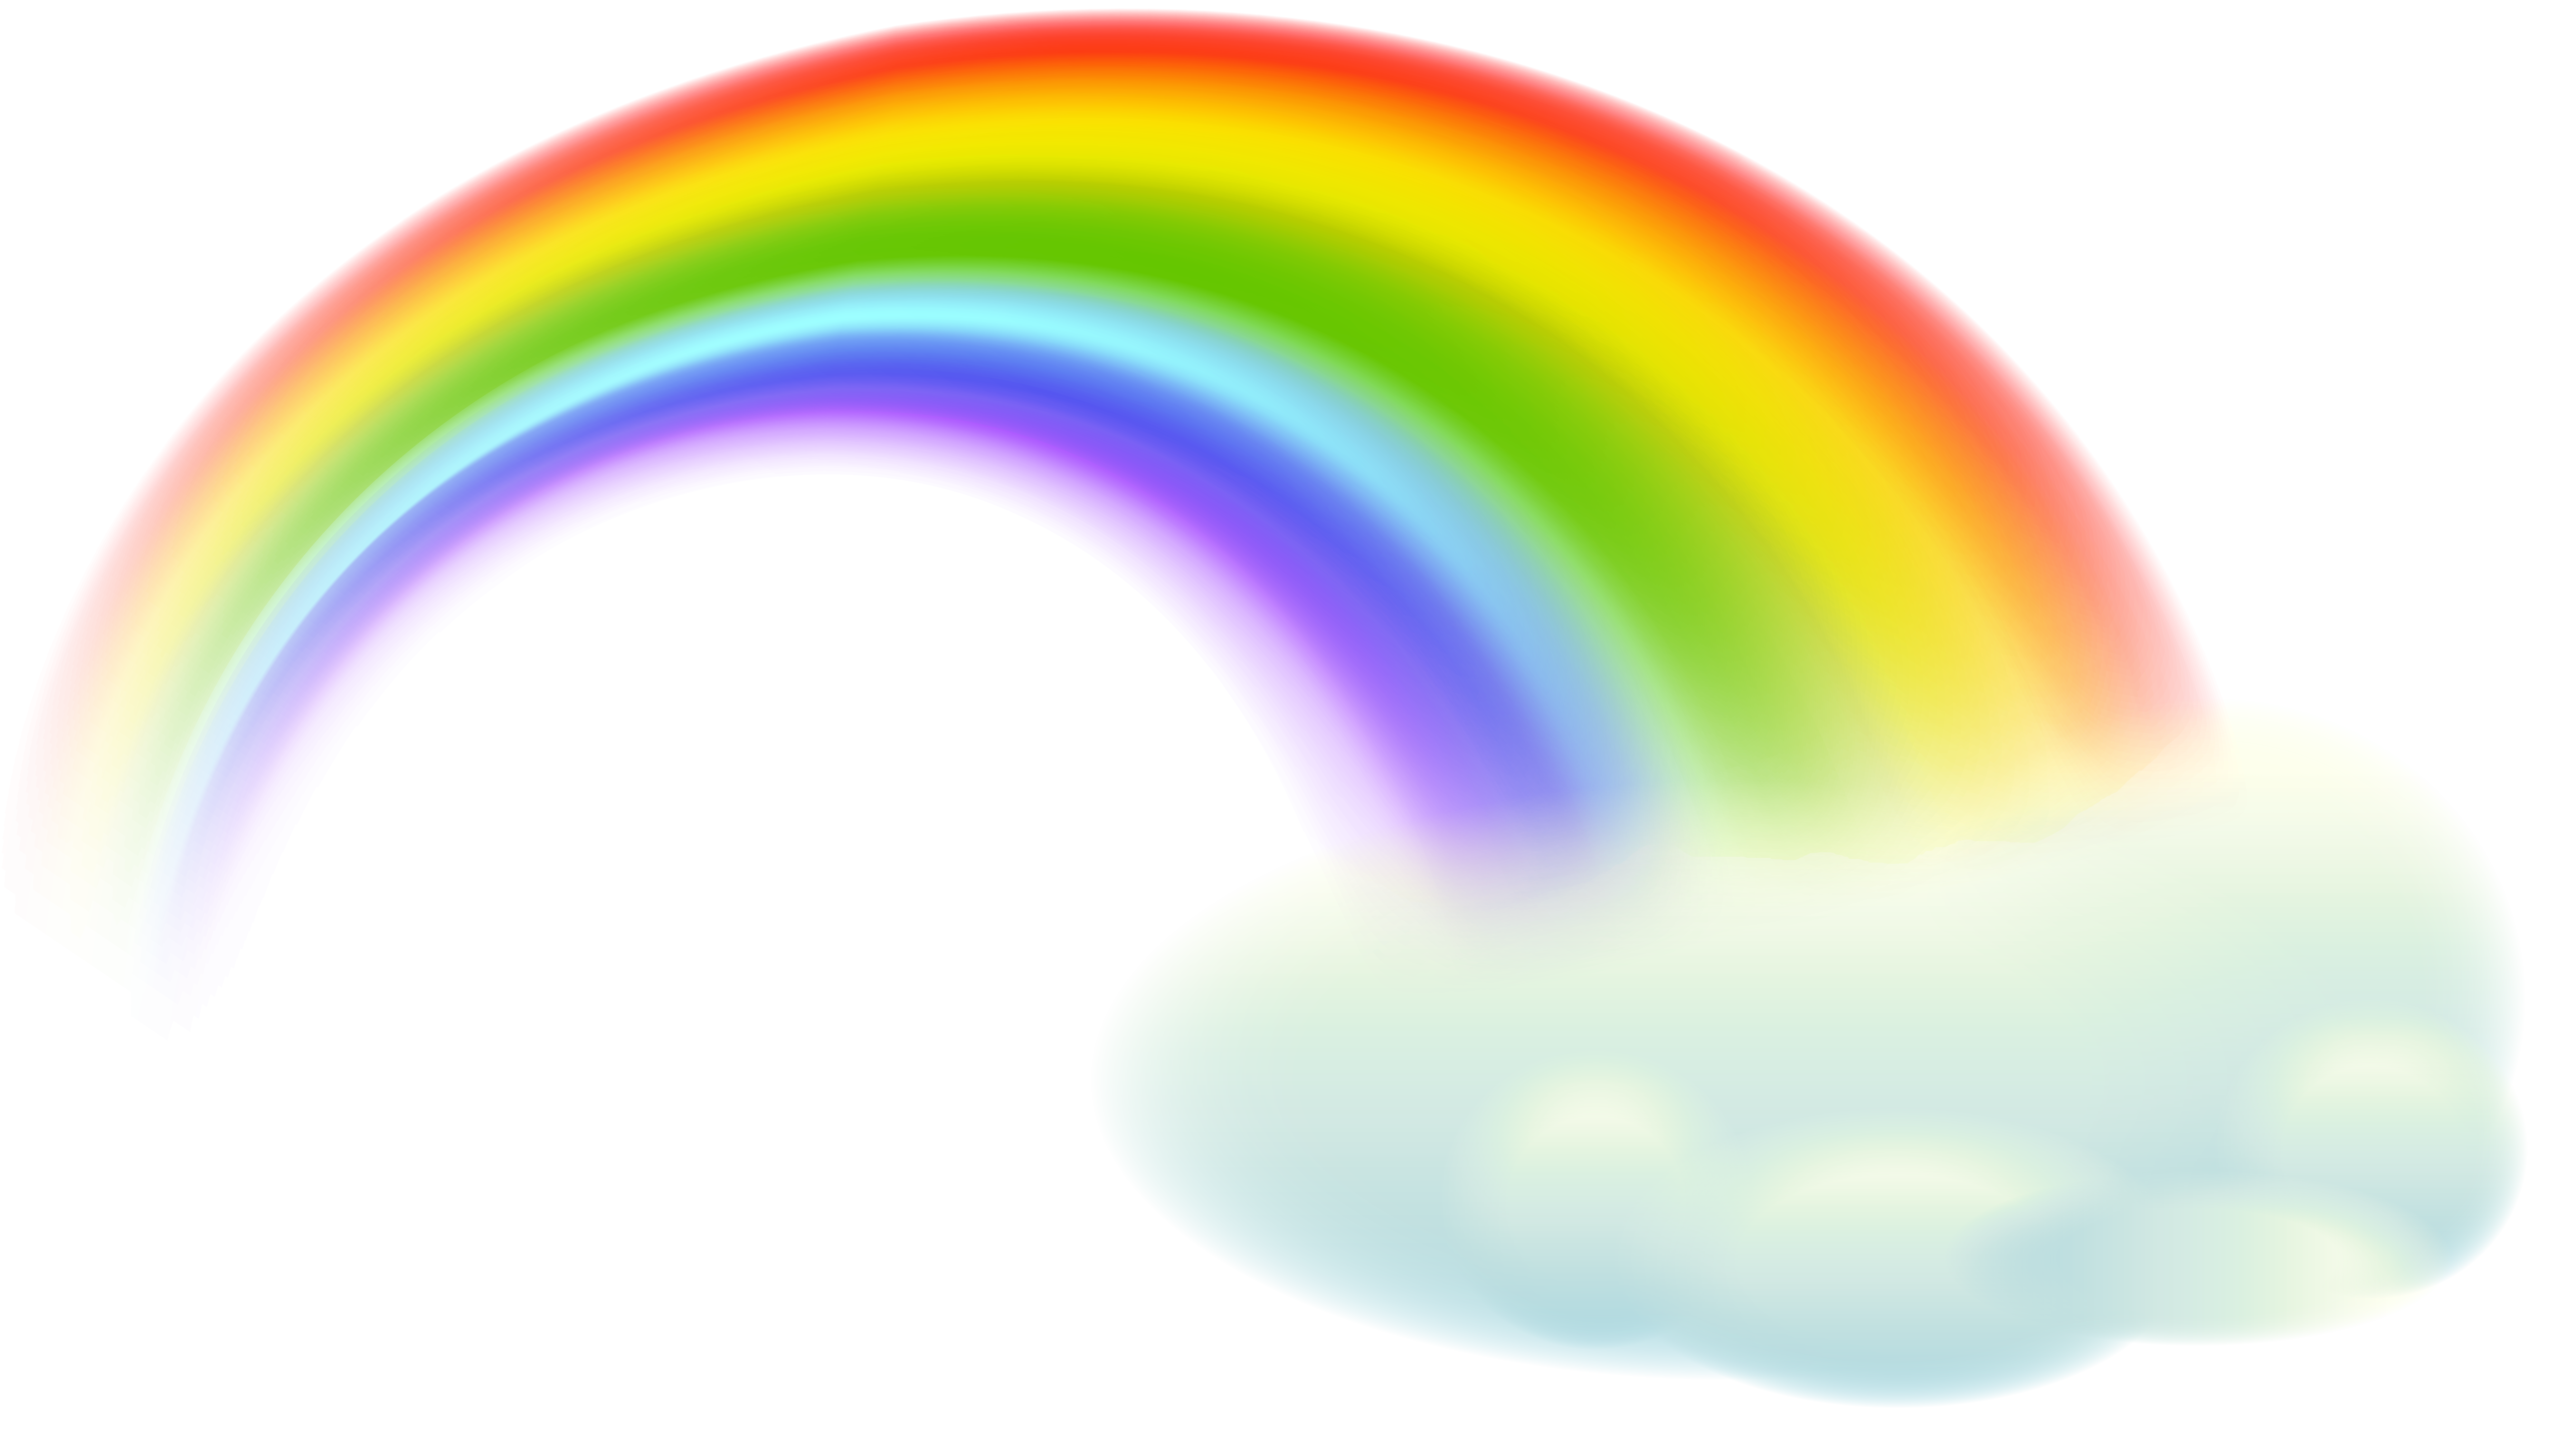 Rainbow Clip Art Rainbow Sun And Clouds Png Transparent Clip Art